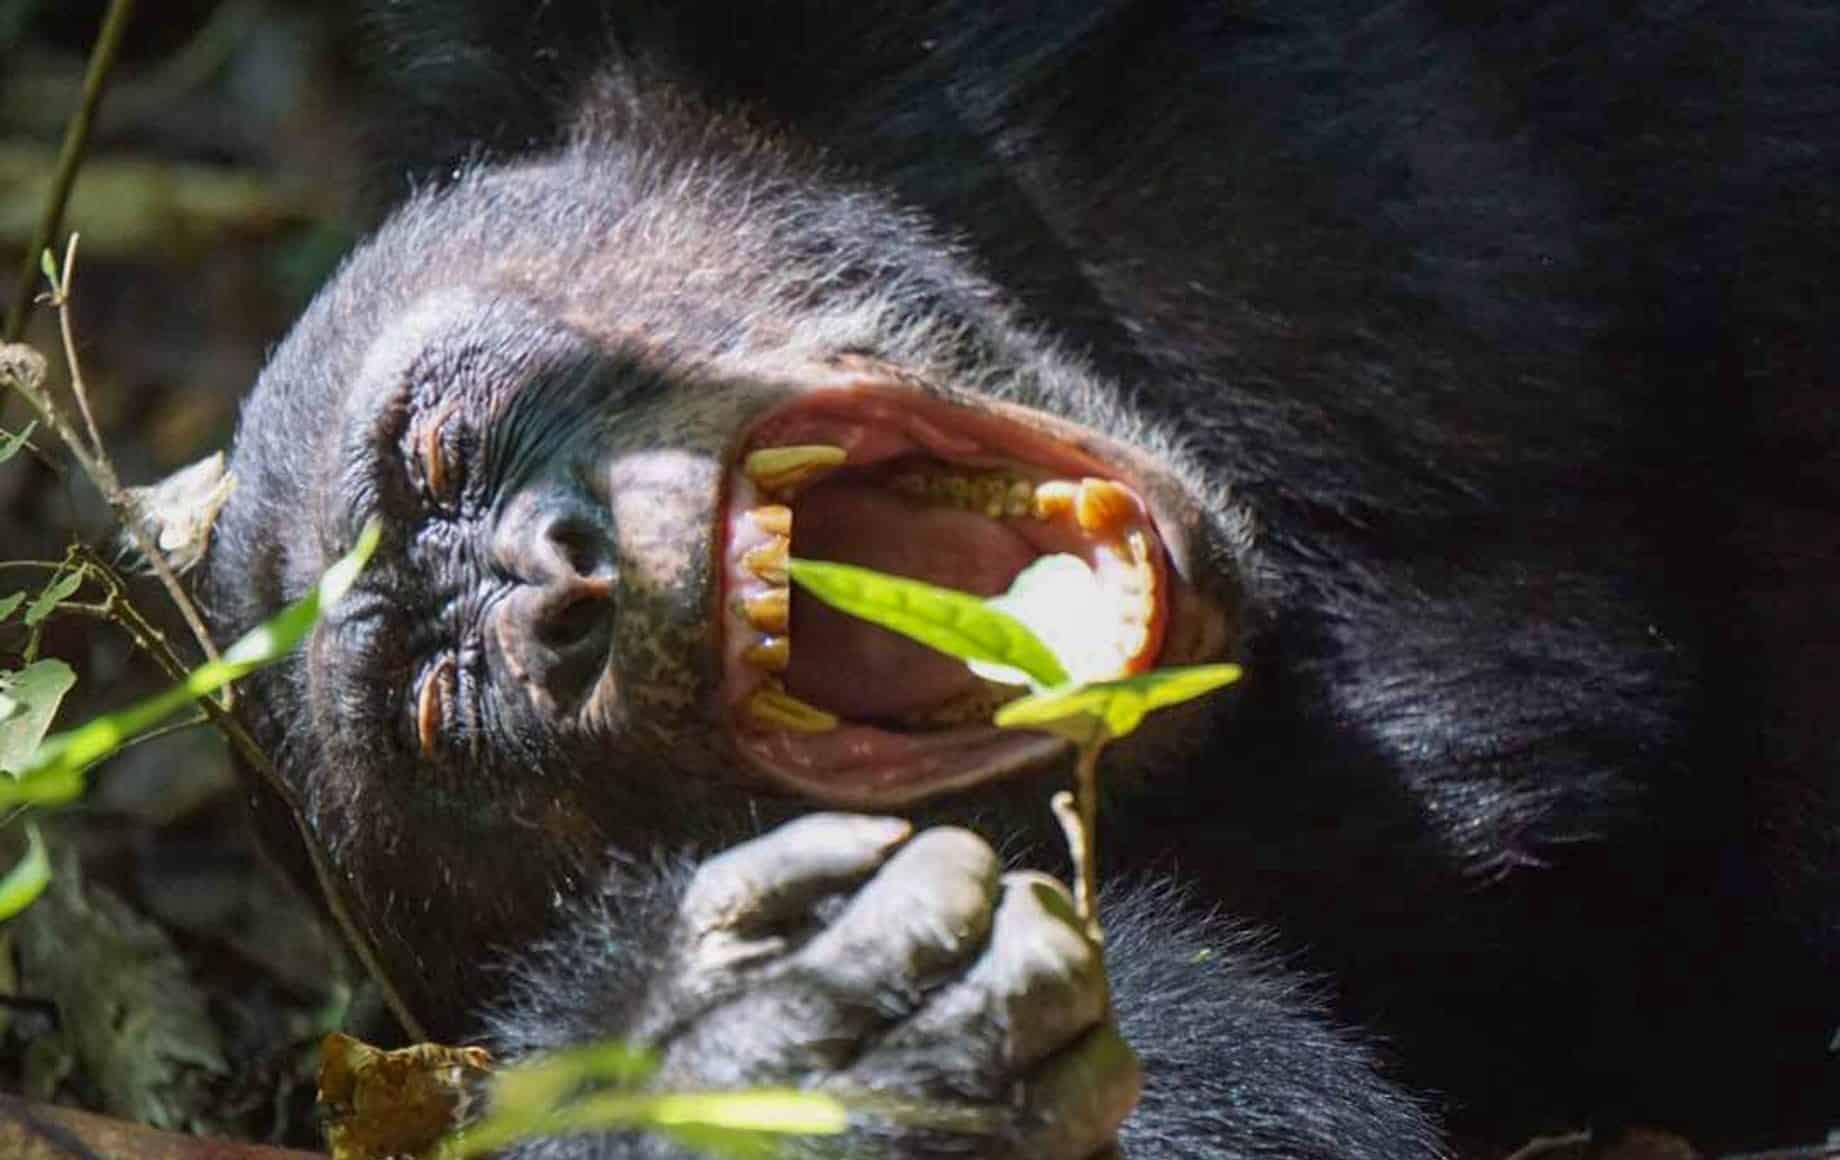 A screaming gorilla at Mahale Mountains National Park